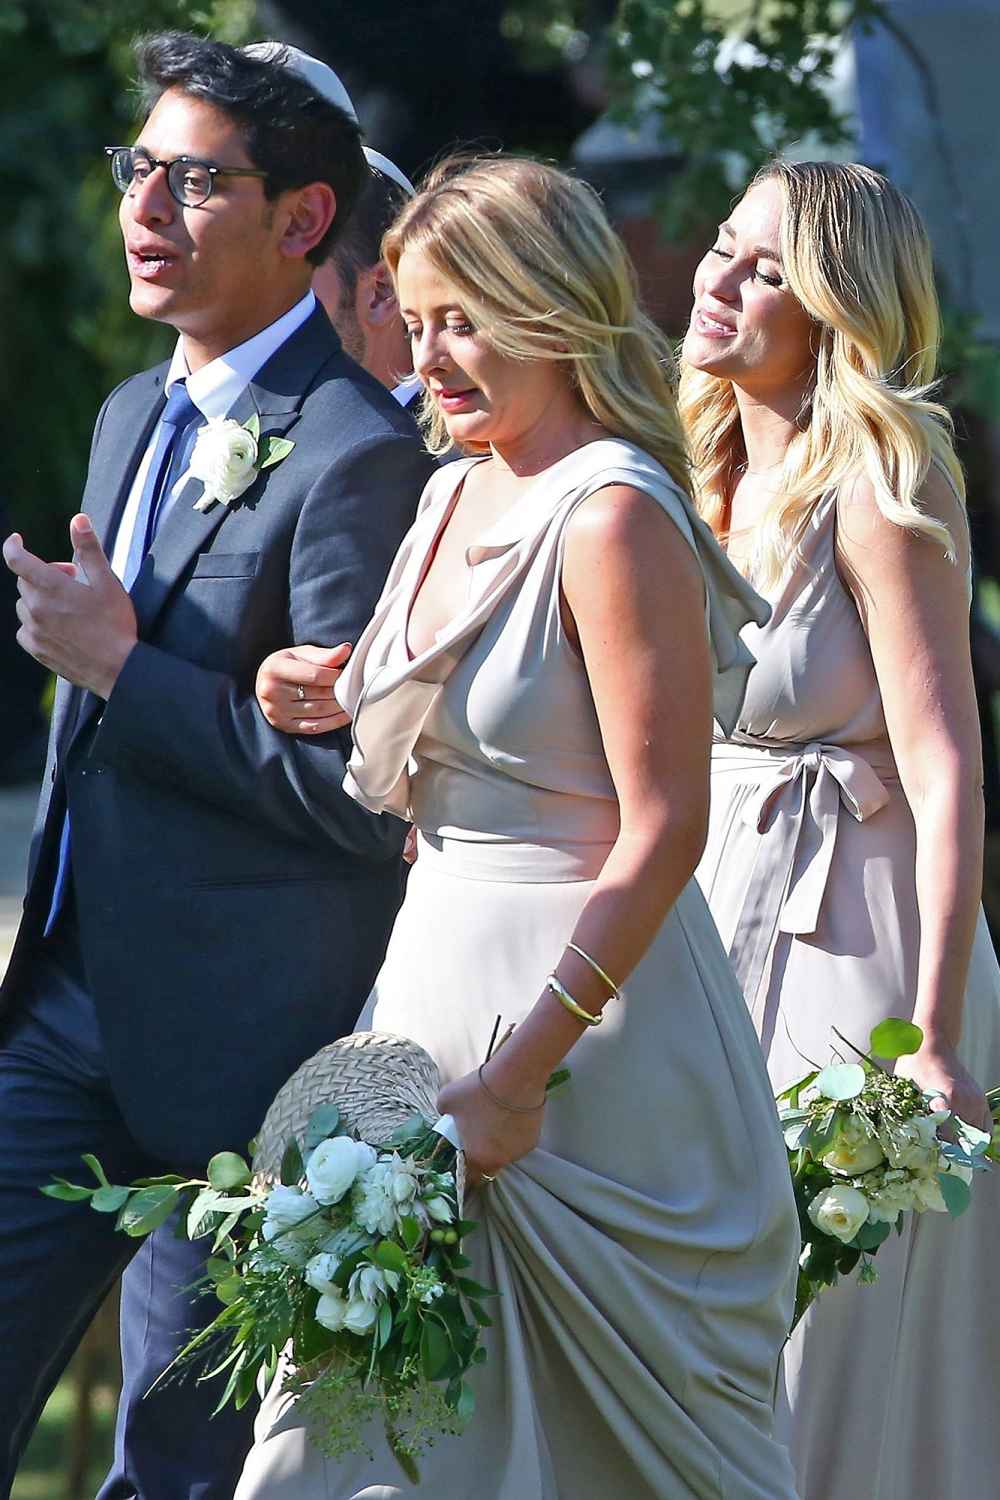 Lauren Conrad Gets Some Wedding Practice as a Bridesmaid at a Friend's  Wedding!: Photo 707779, Lauren Conrad, Lo Bosworth Pictures